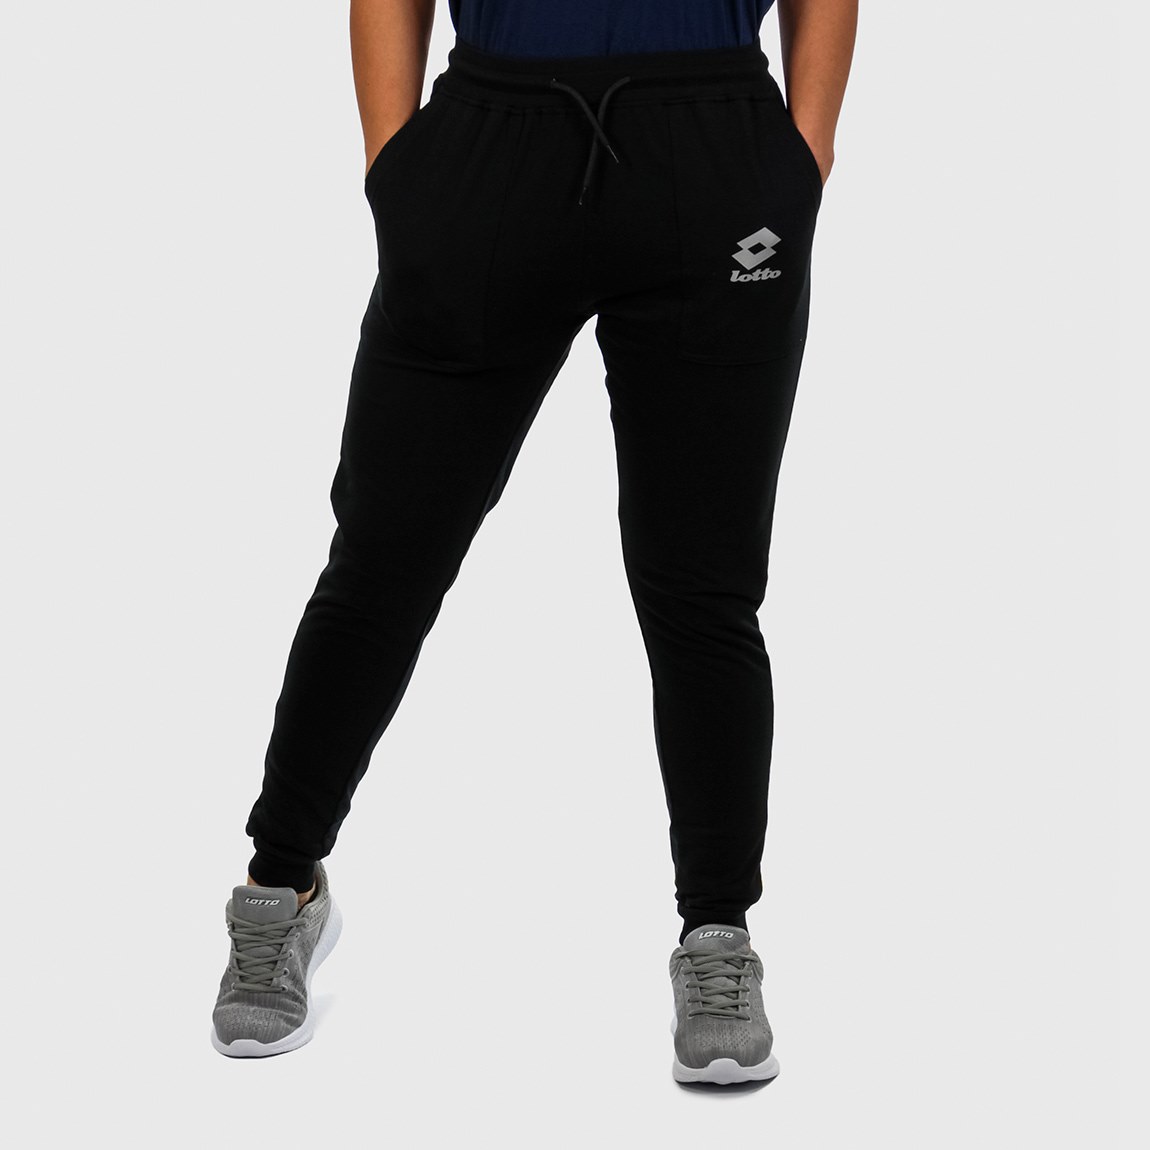 https://sportgroup.uy/content/images/thumbs/0004329_lotto-mujer-pantalon-leggins-negro.jpeg